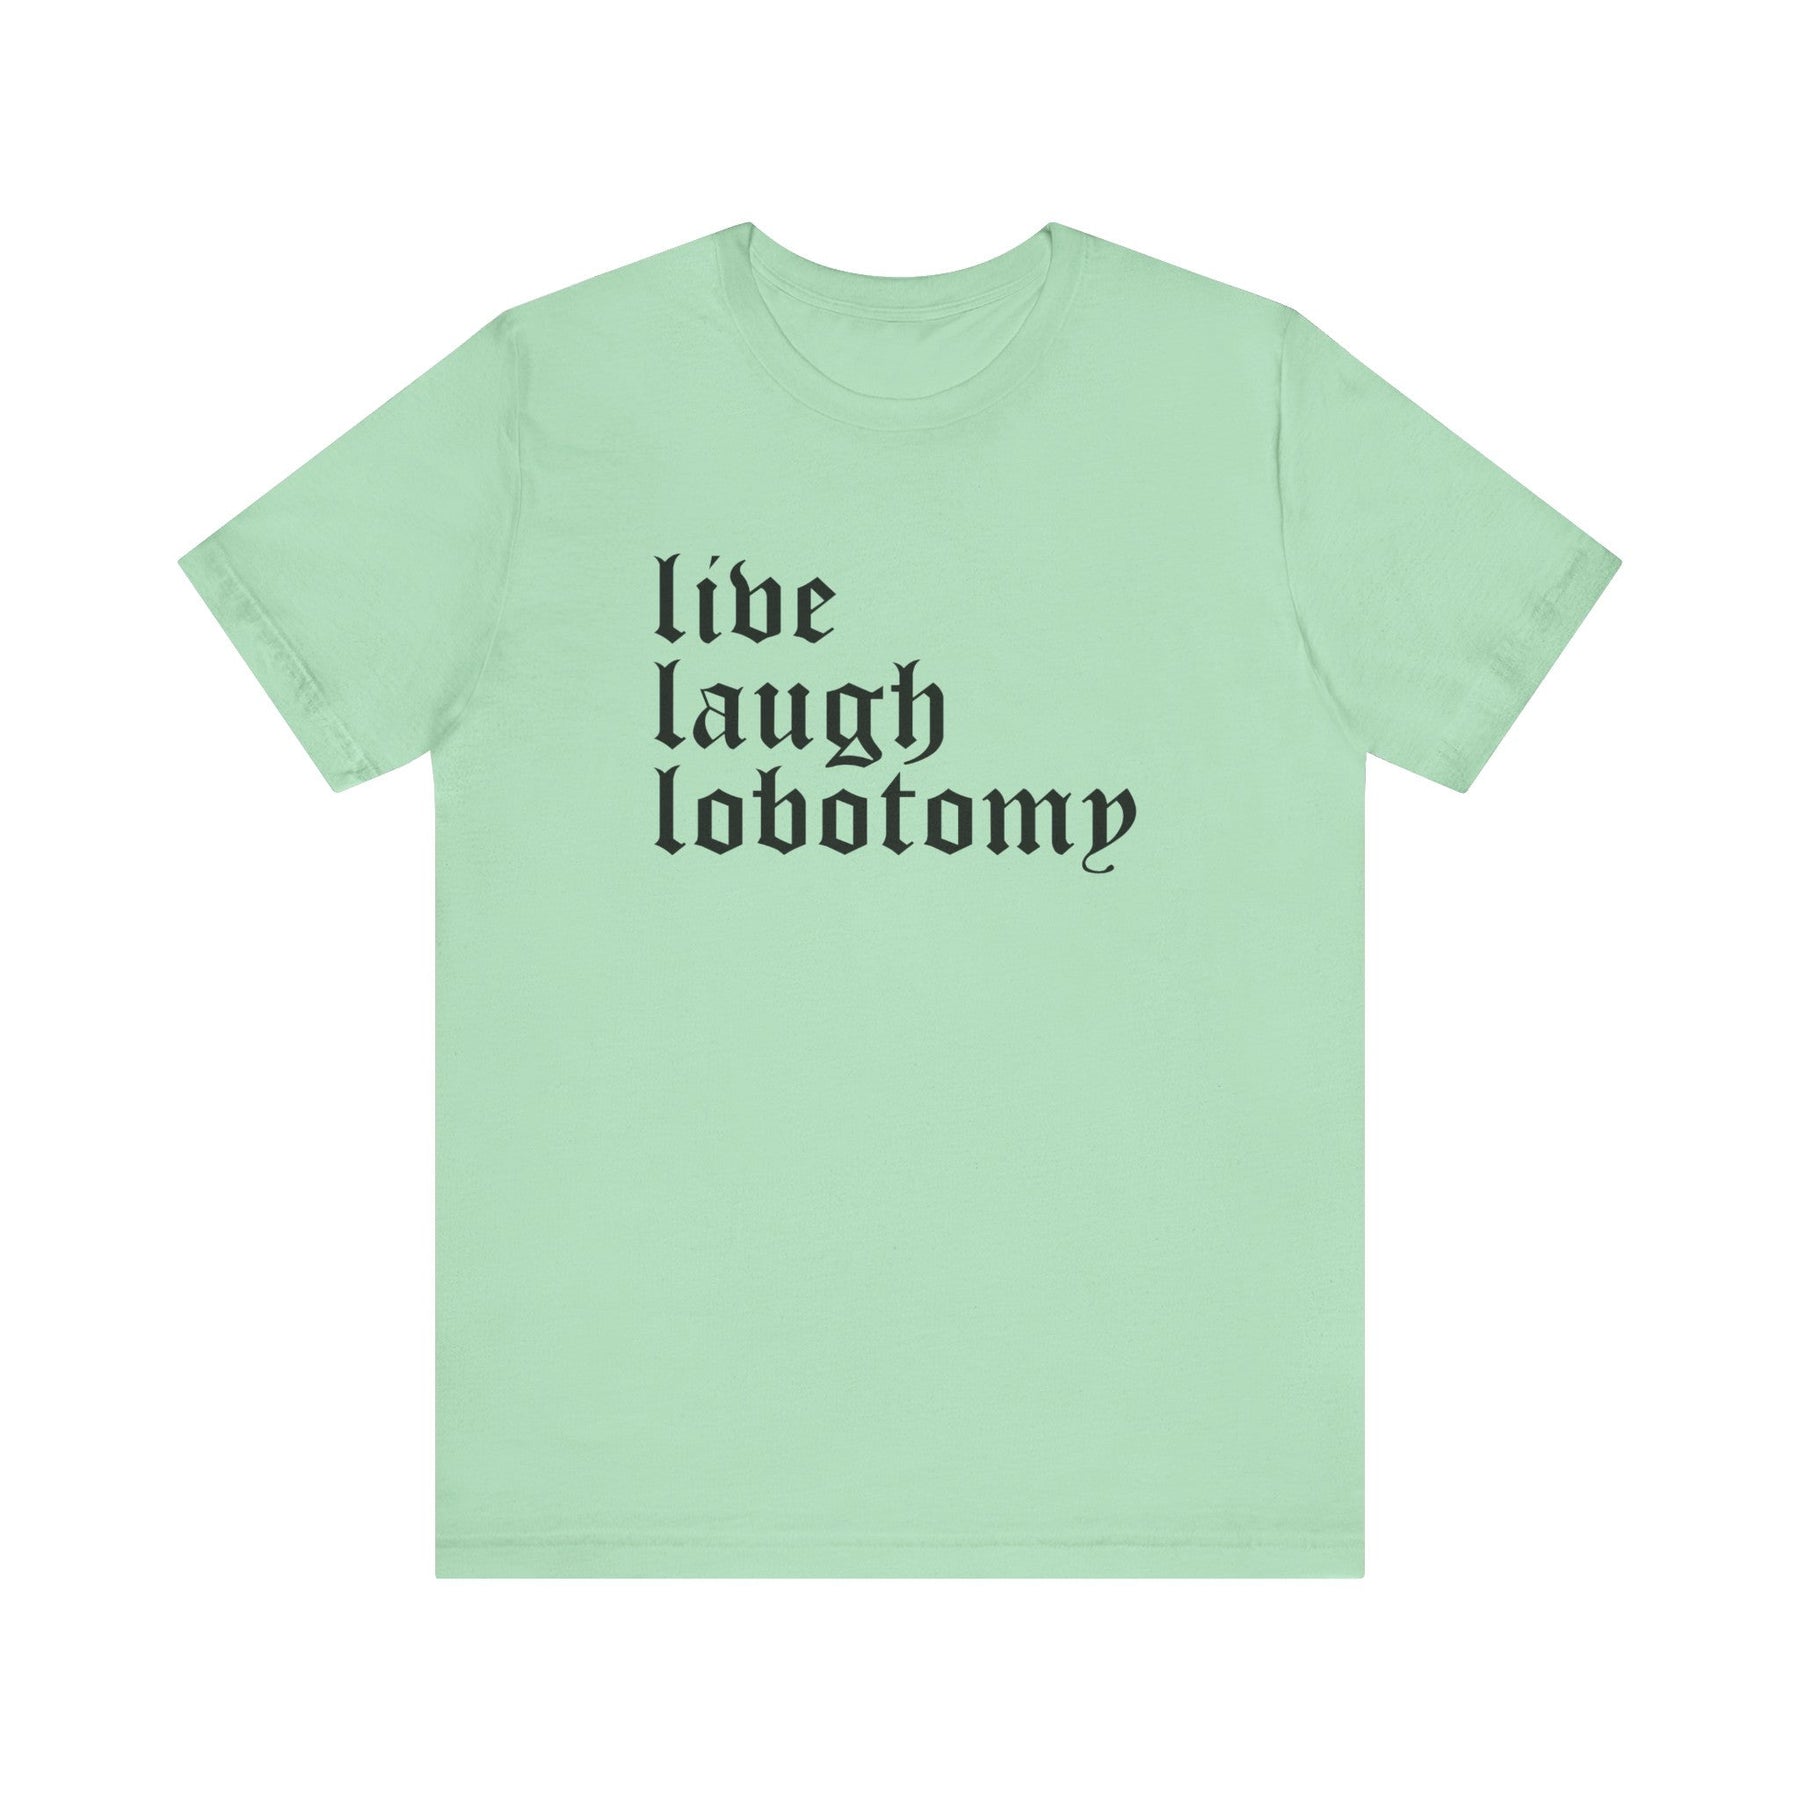 Live Laugh Lobotomy Short Sleeve Tee - Goth Cloth Co.T - Shirt50171199346771241321